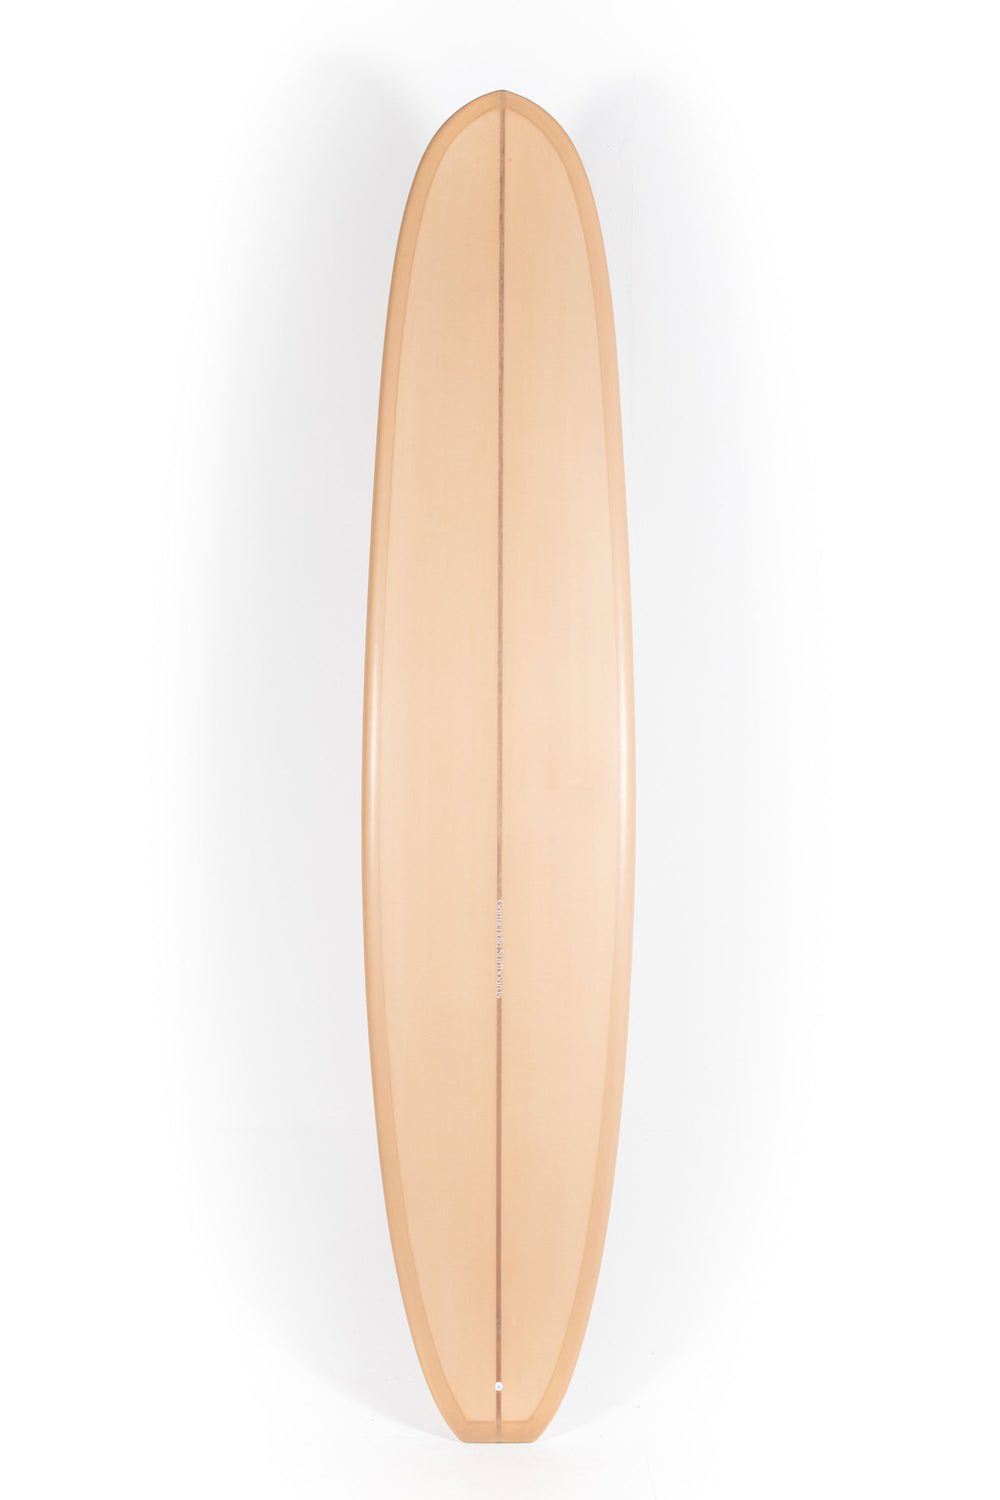 Pukas Surf Shop - Garmendia Surfboards - BULLET - 9'4